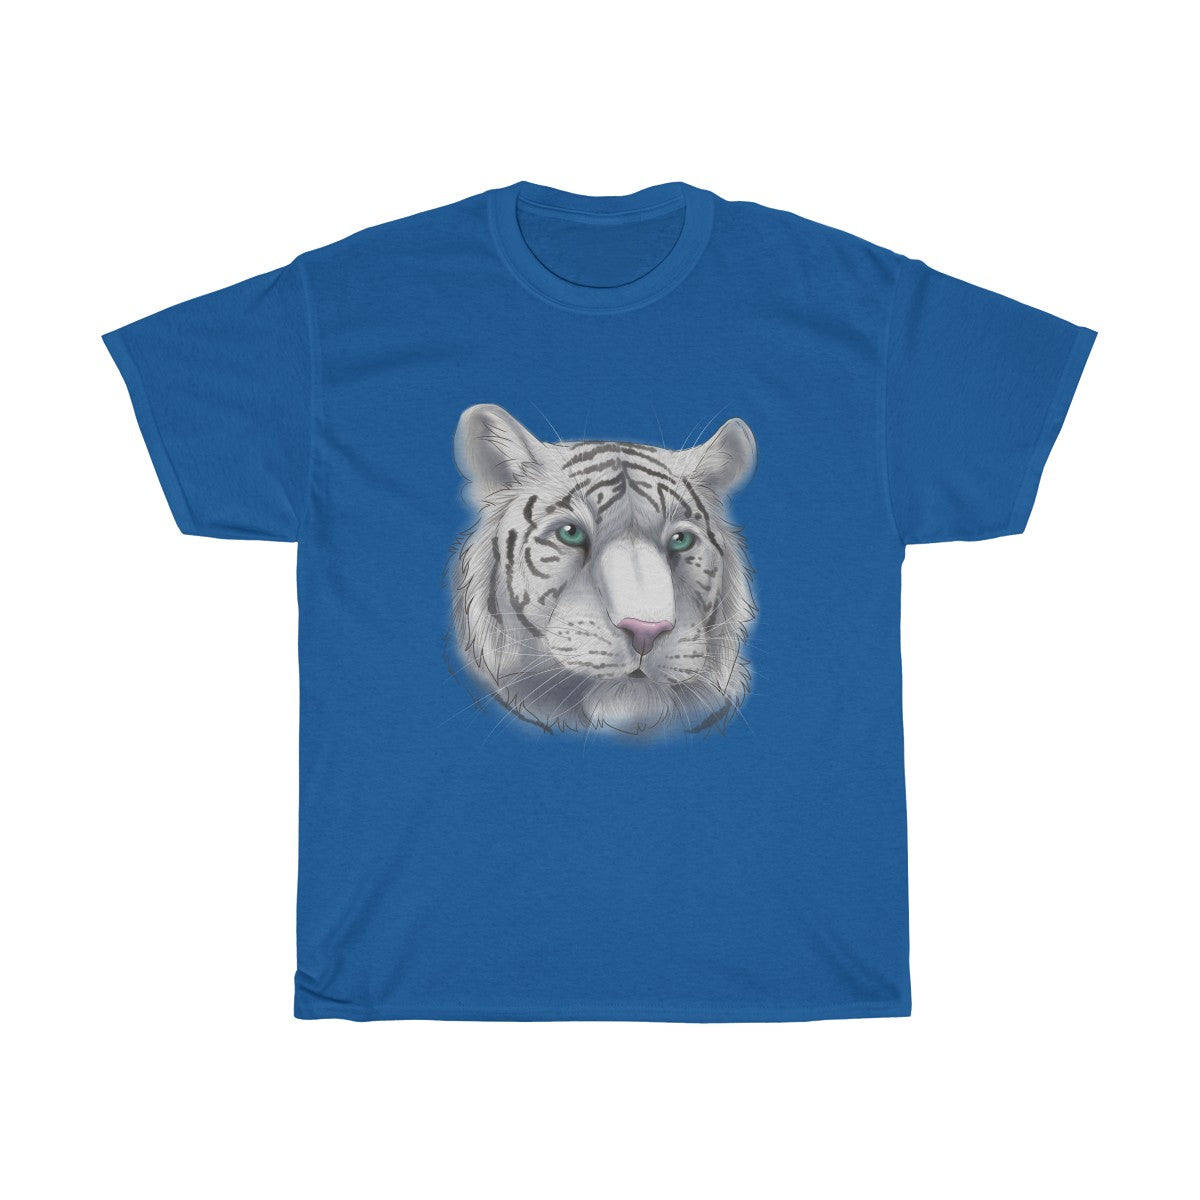 White Tiger - T-Shirt T-Shirt Dire Creatures Royal Blue S 